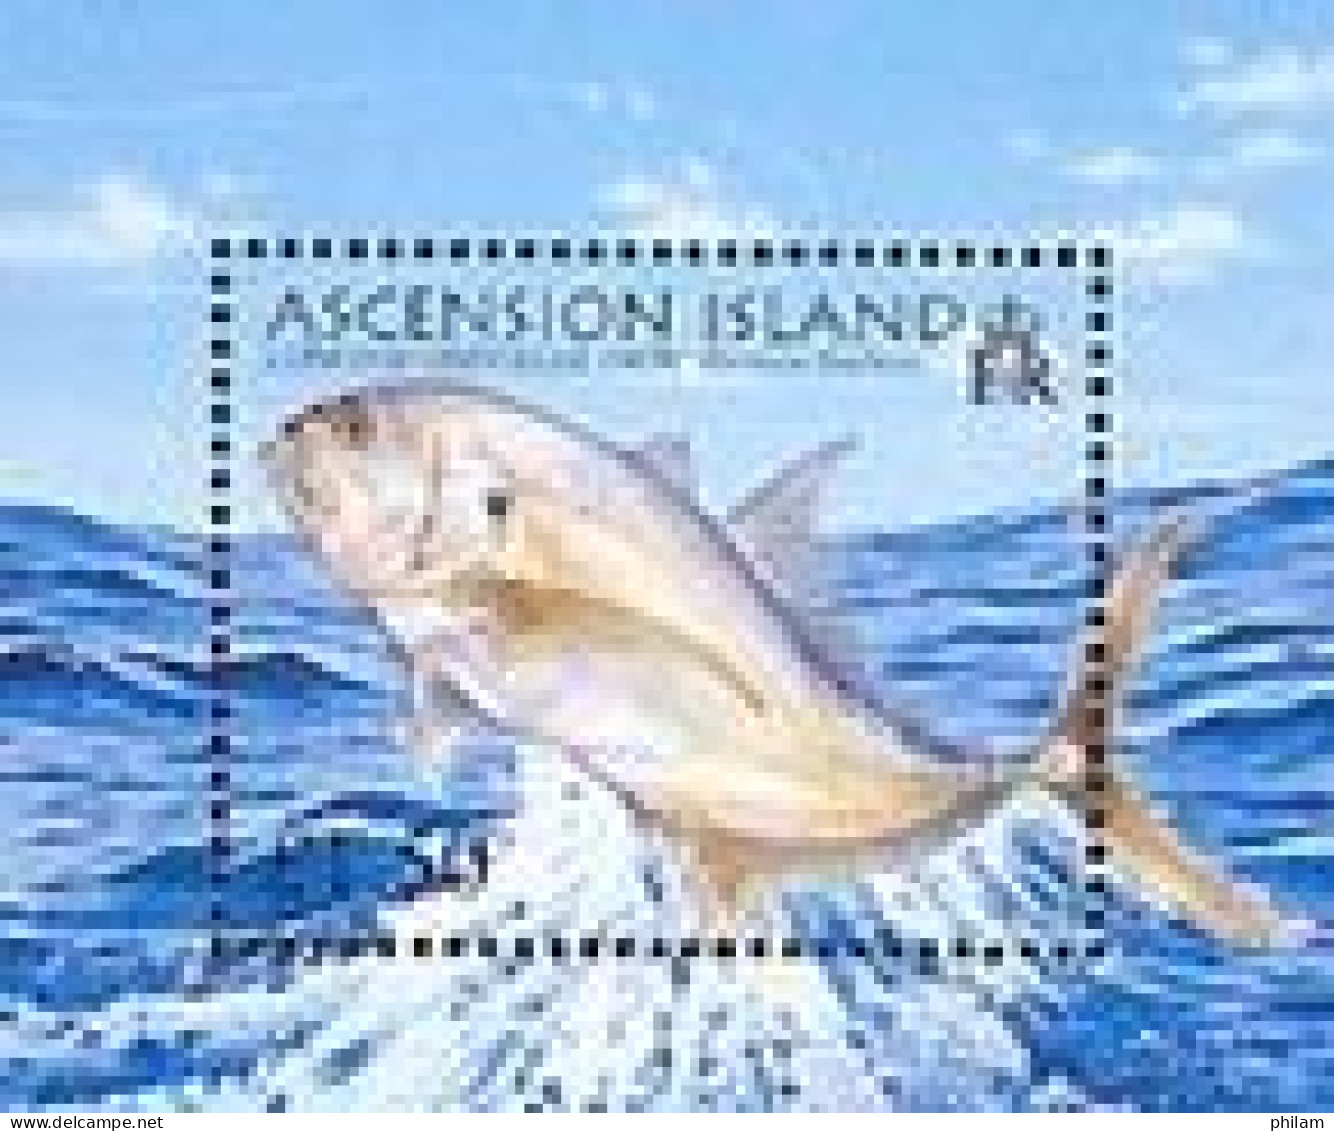 ASCENSION 2006 - Poisson Longfin Crevalle Jack - BF - Ascensión